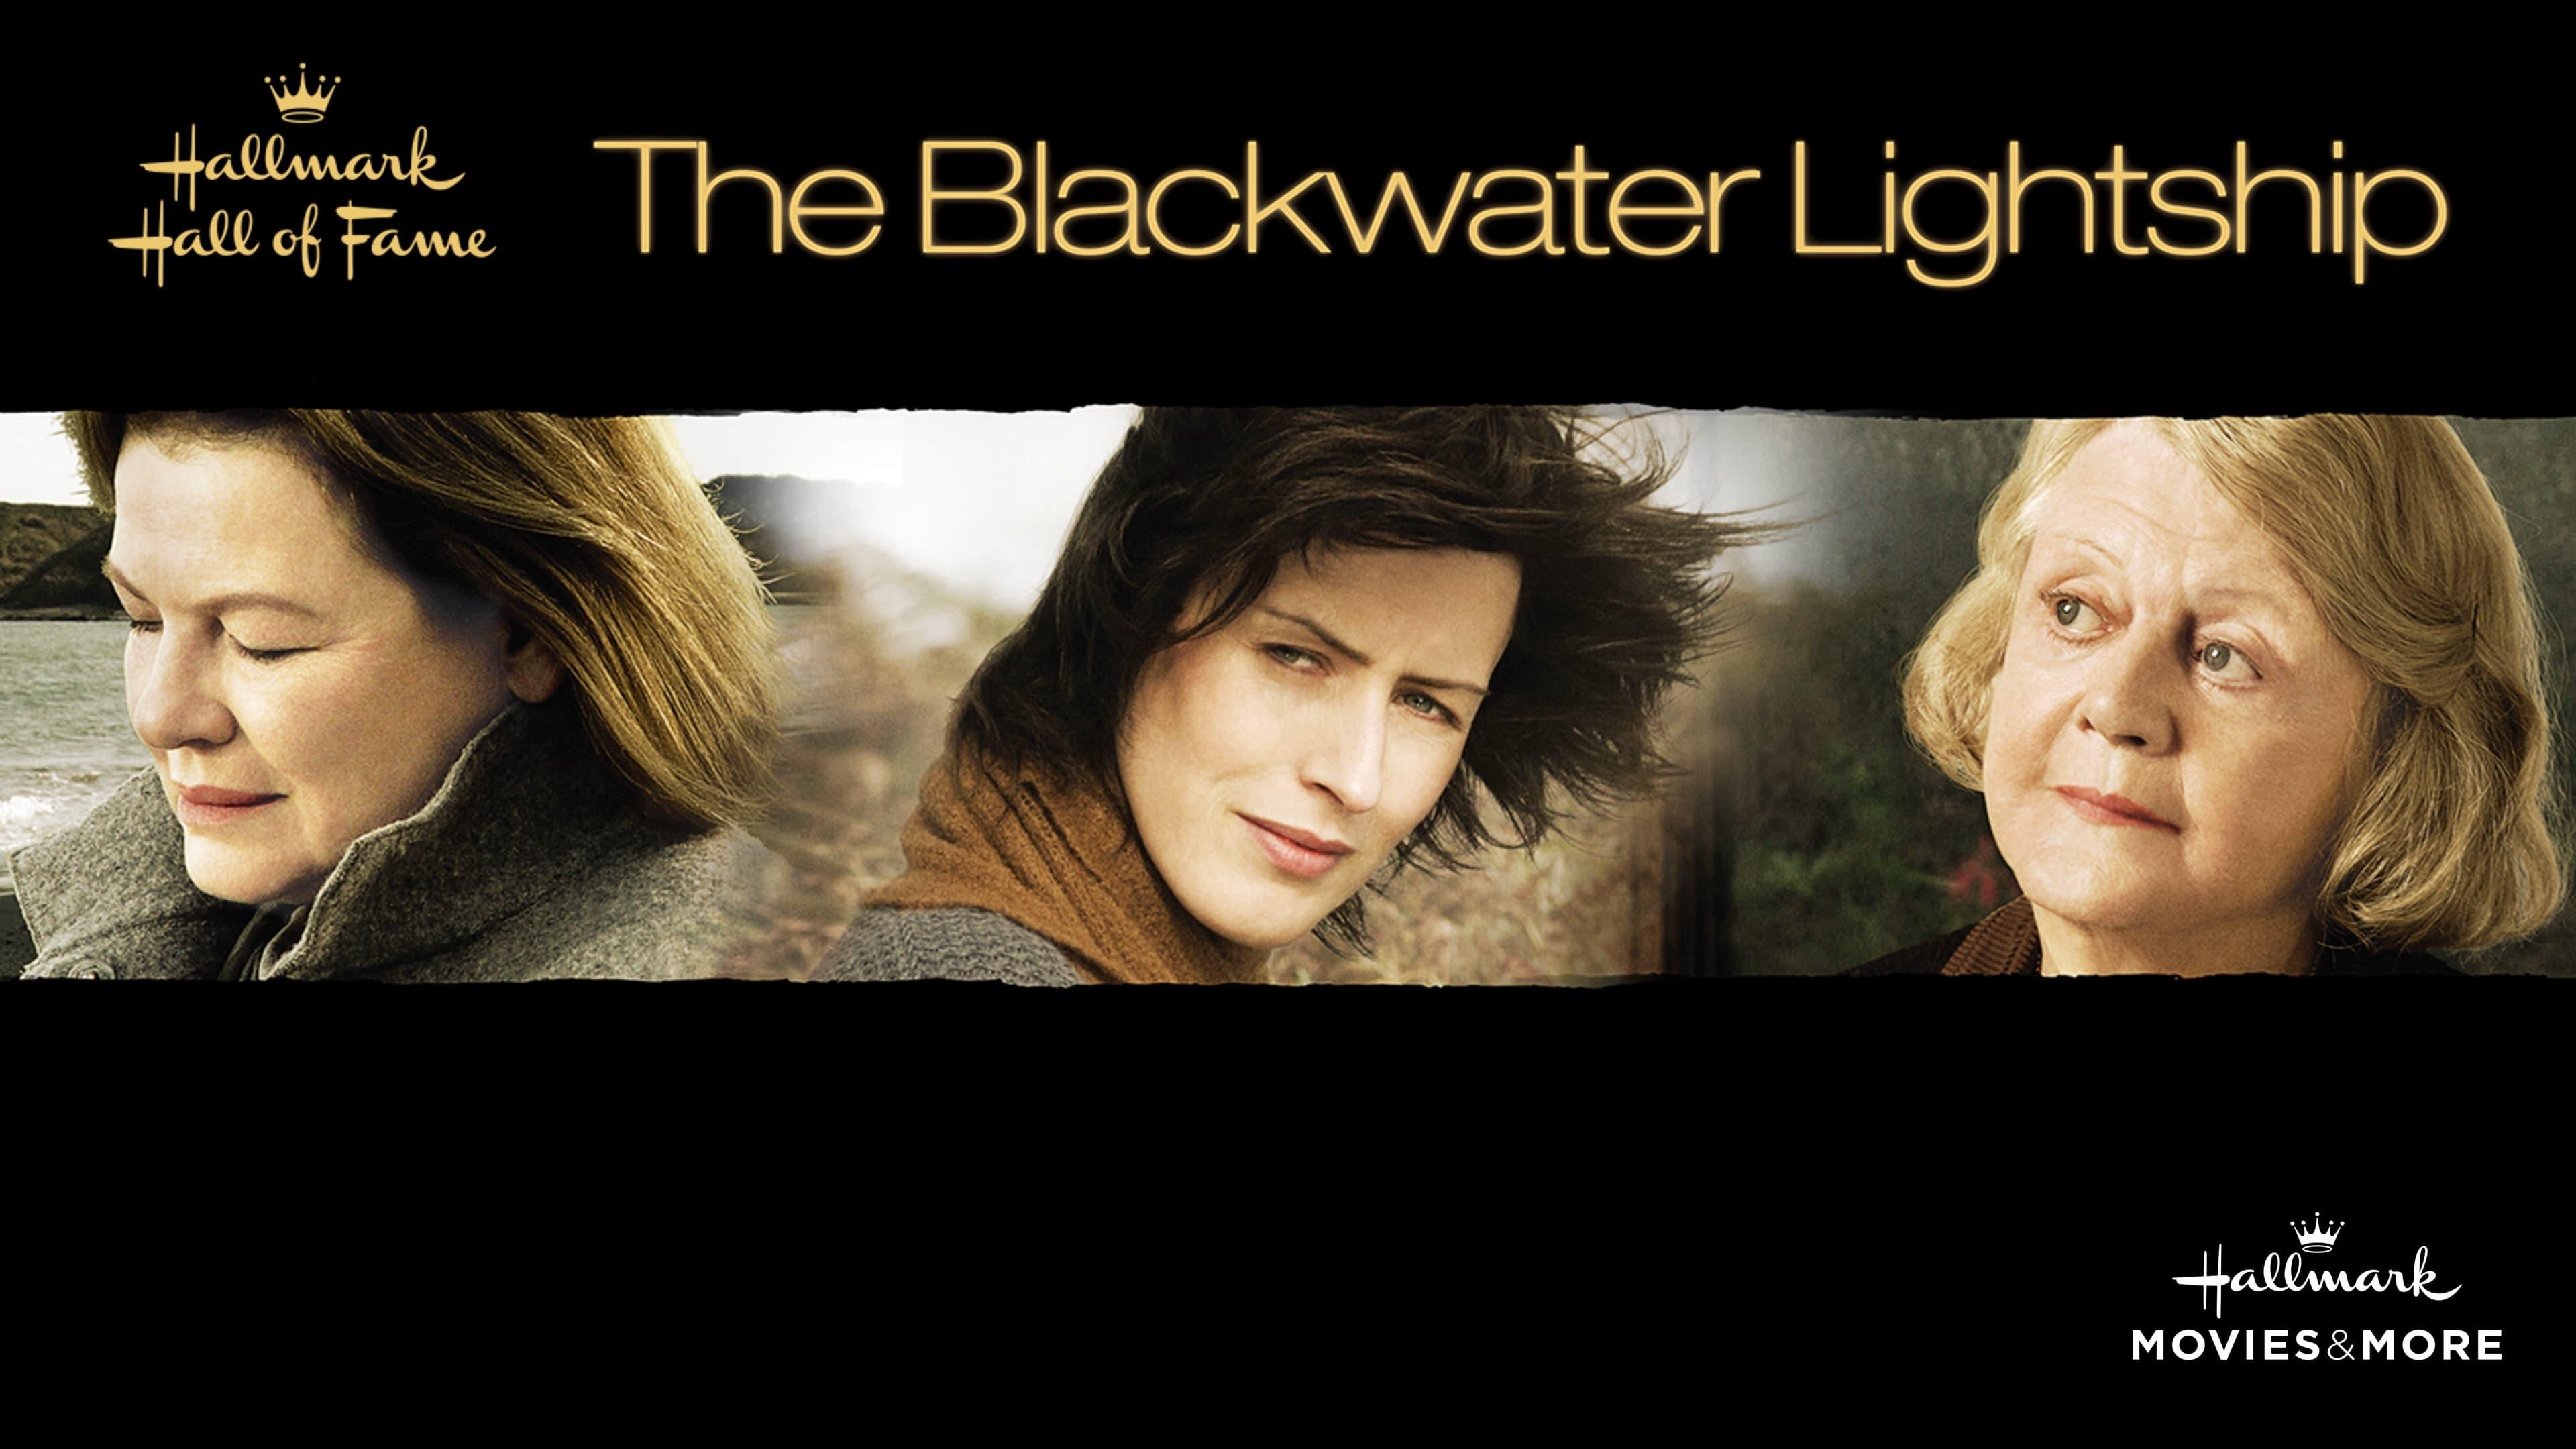 The Blackwater Lightship backdrop